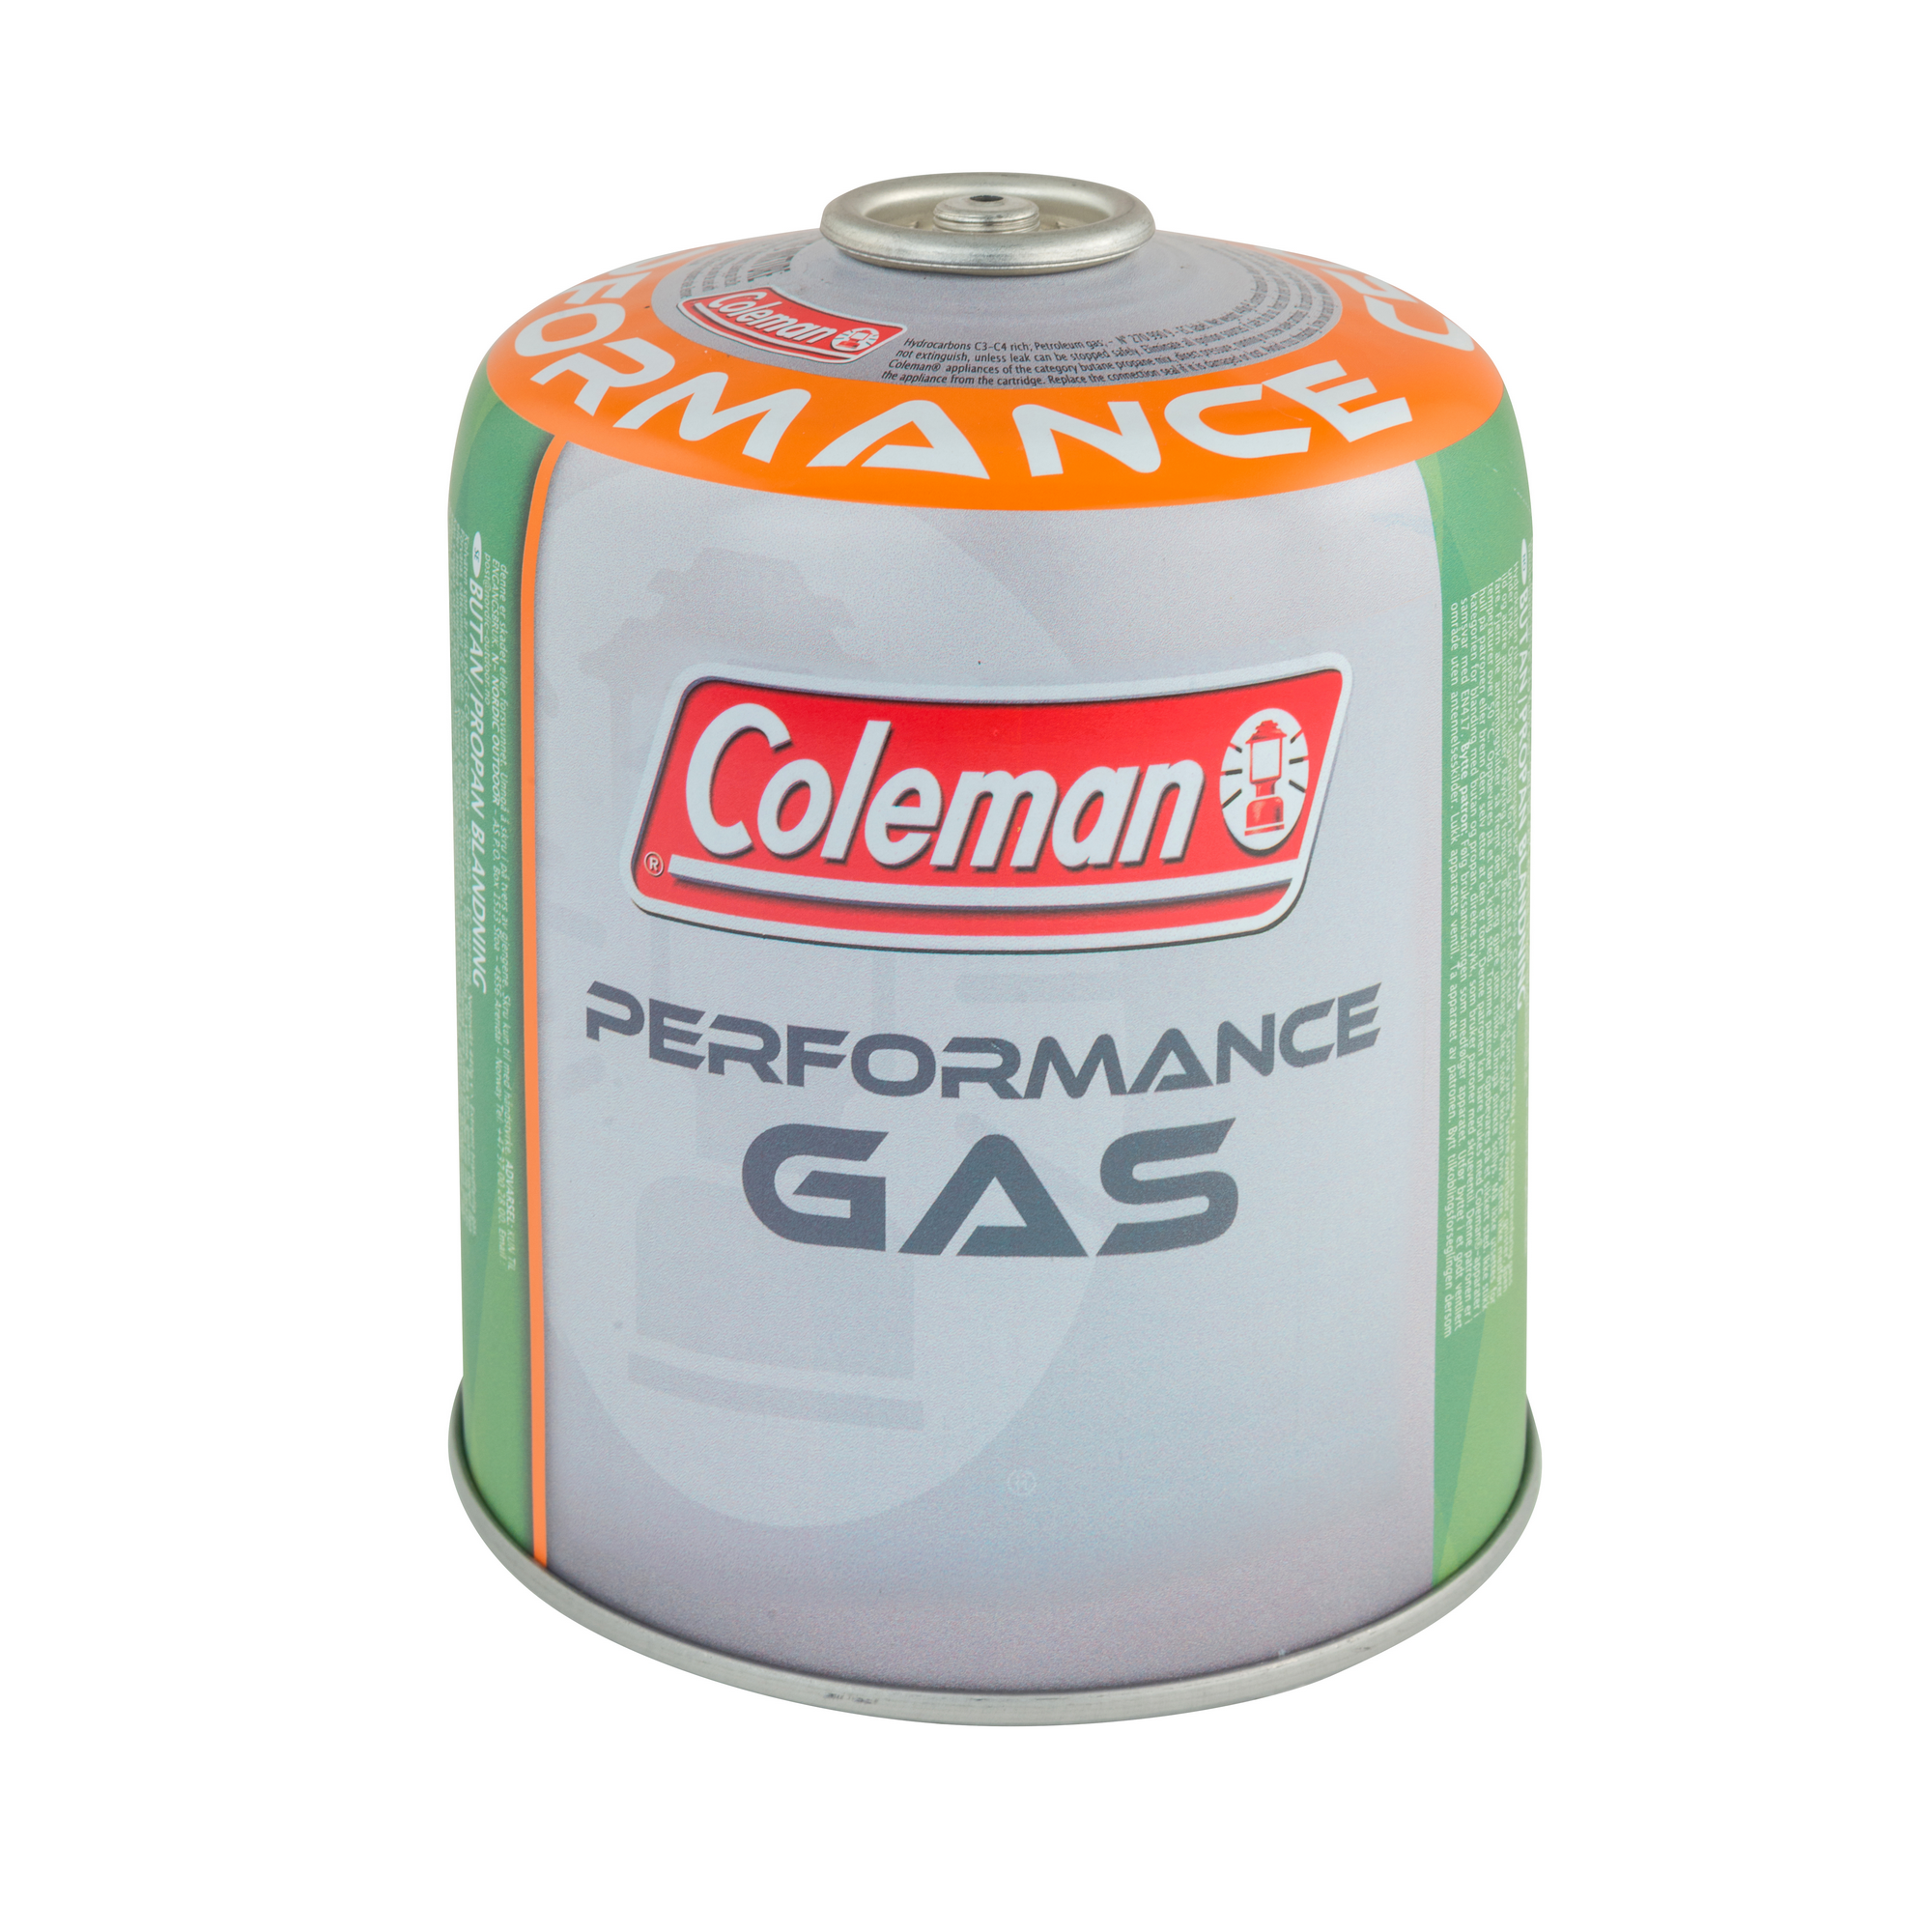 Ventilkartusche Performance Gas C500 70/30 Butan-/Propangasgemisch 440 g + product picture